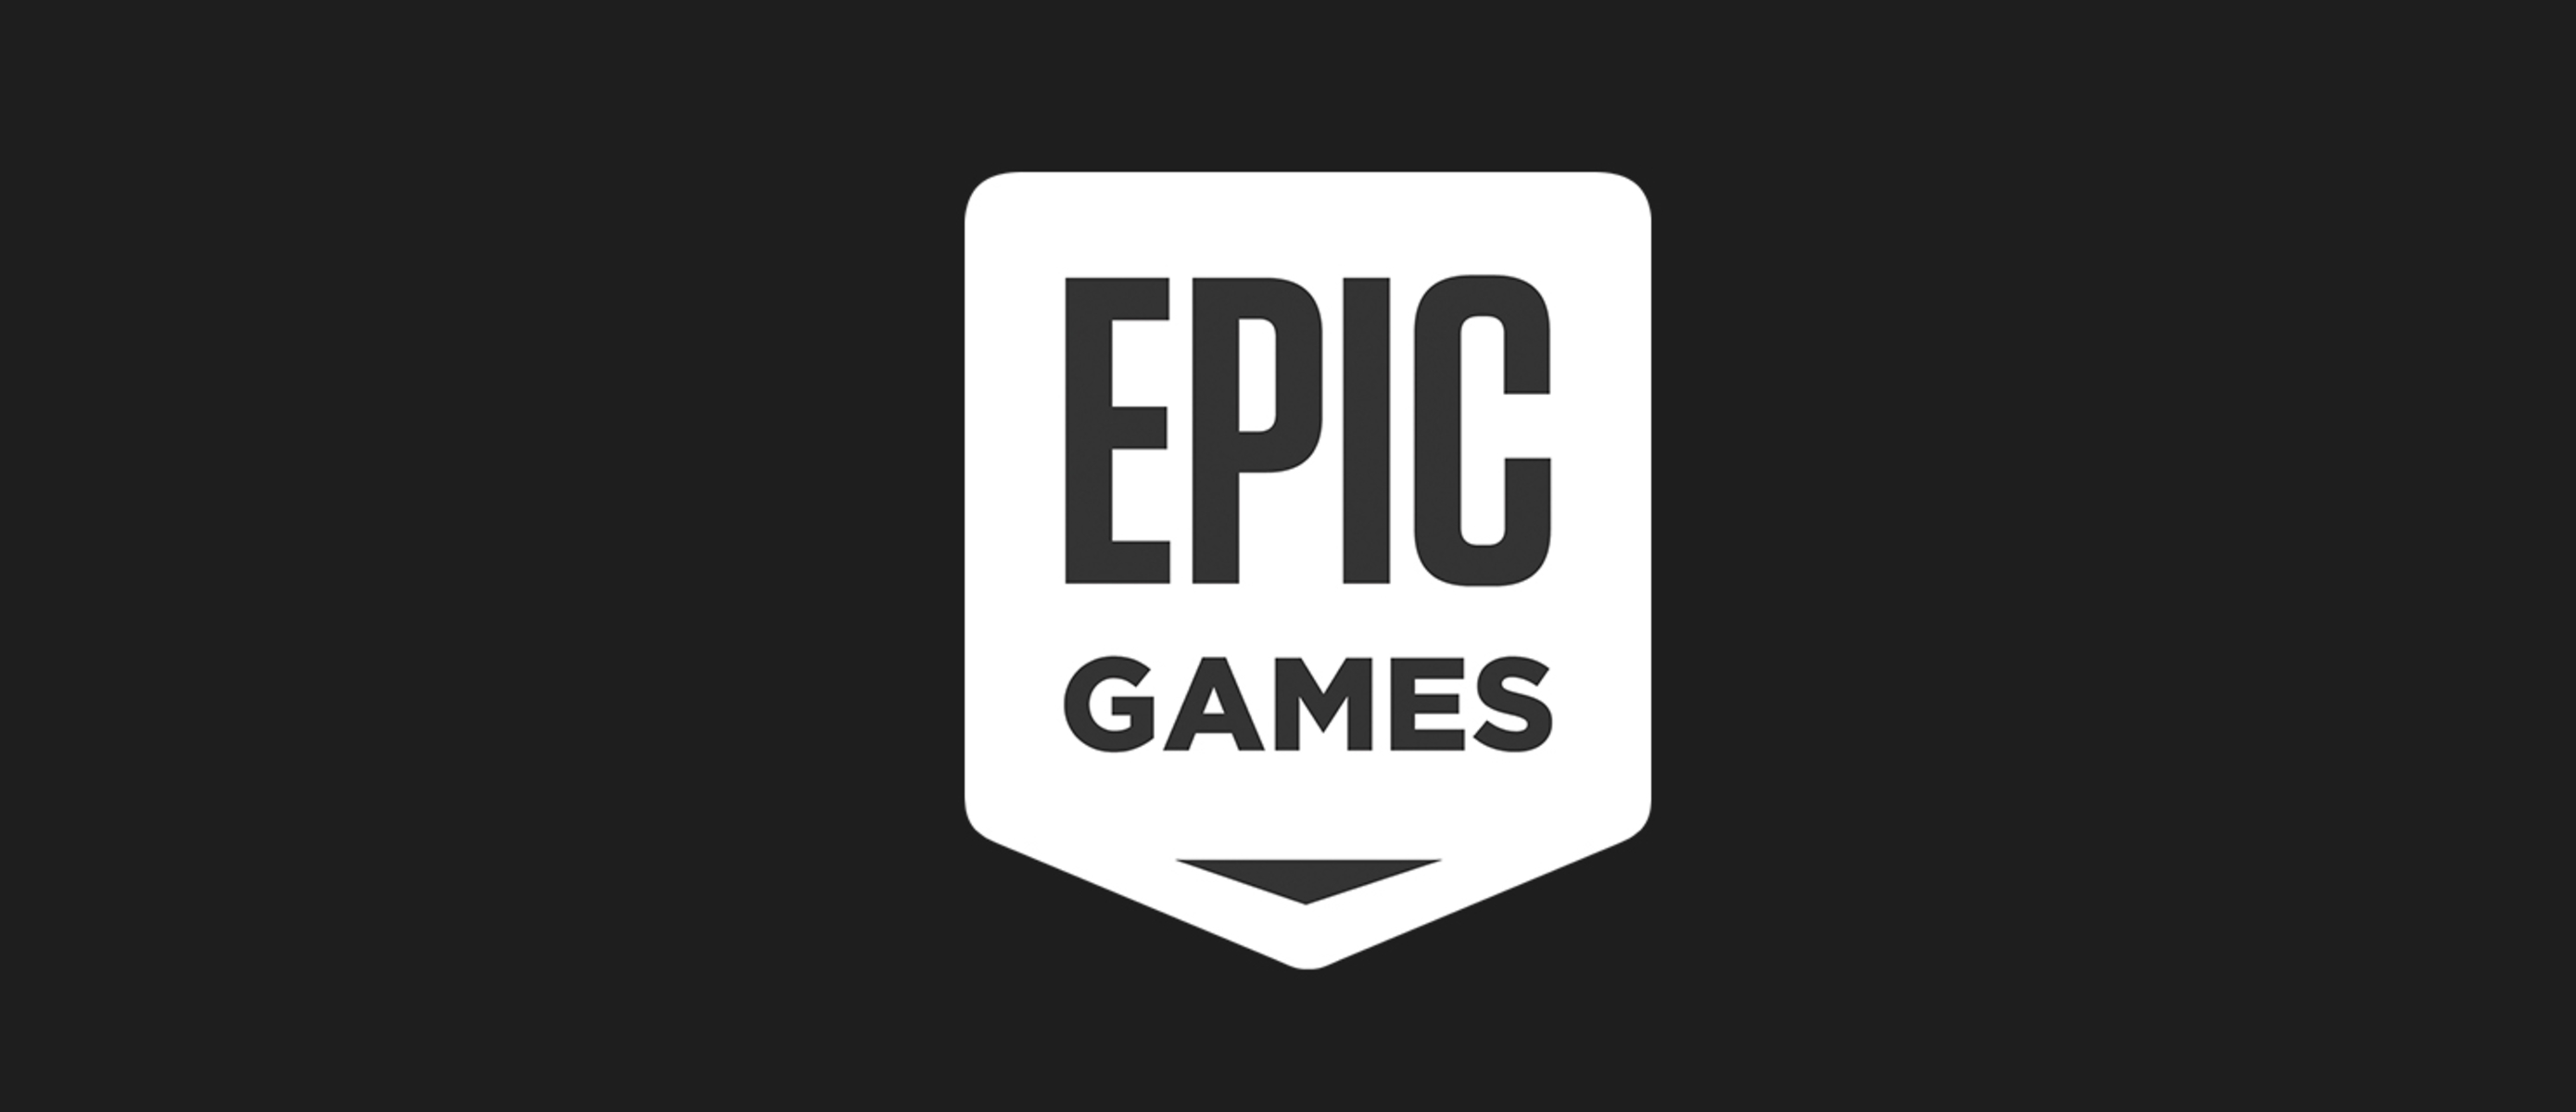 Stars epic games. ЭПИК геймс. Логотип Epic games. ЭПИК гейм стор. ЭПИК геймс обложка.